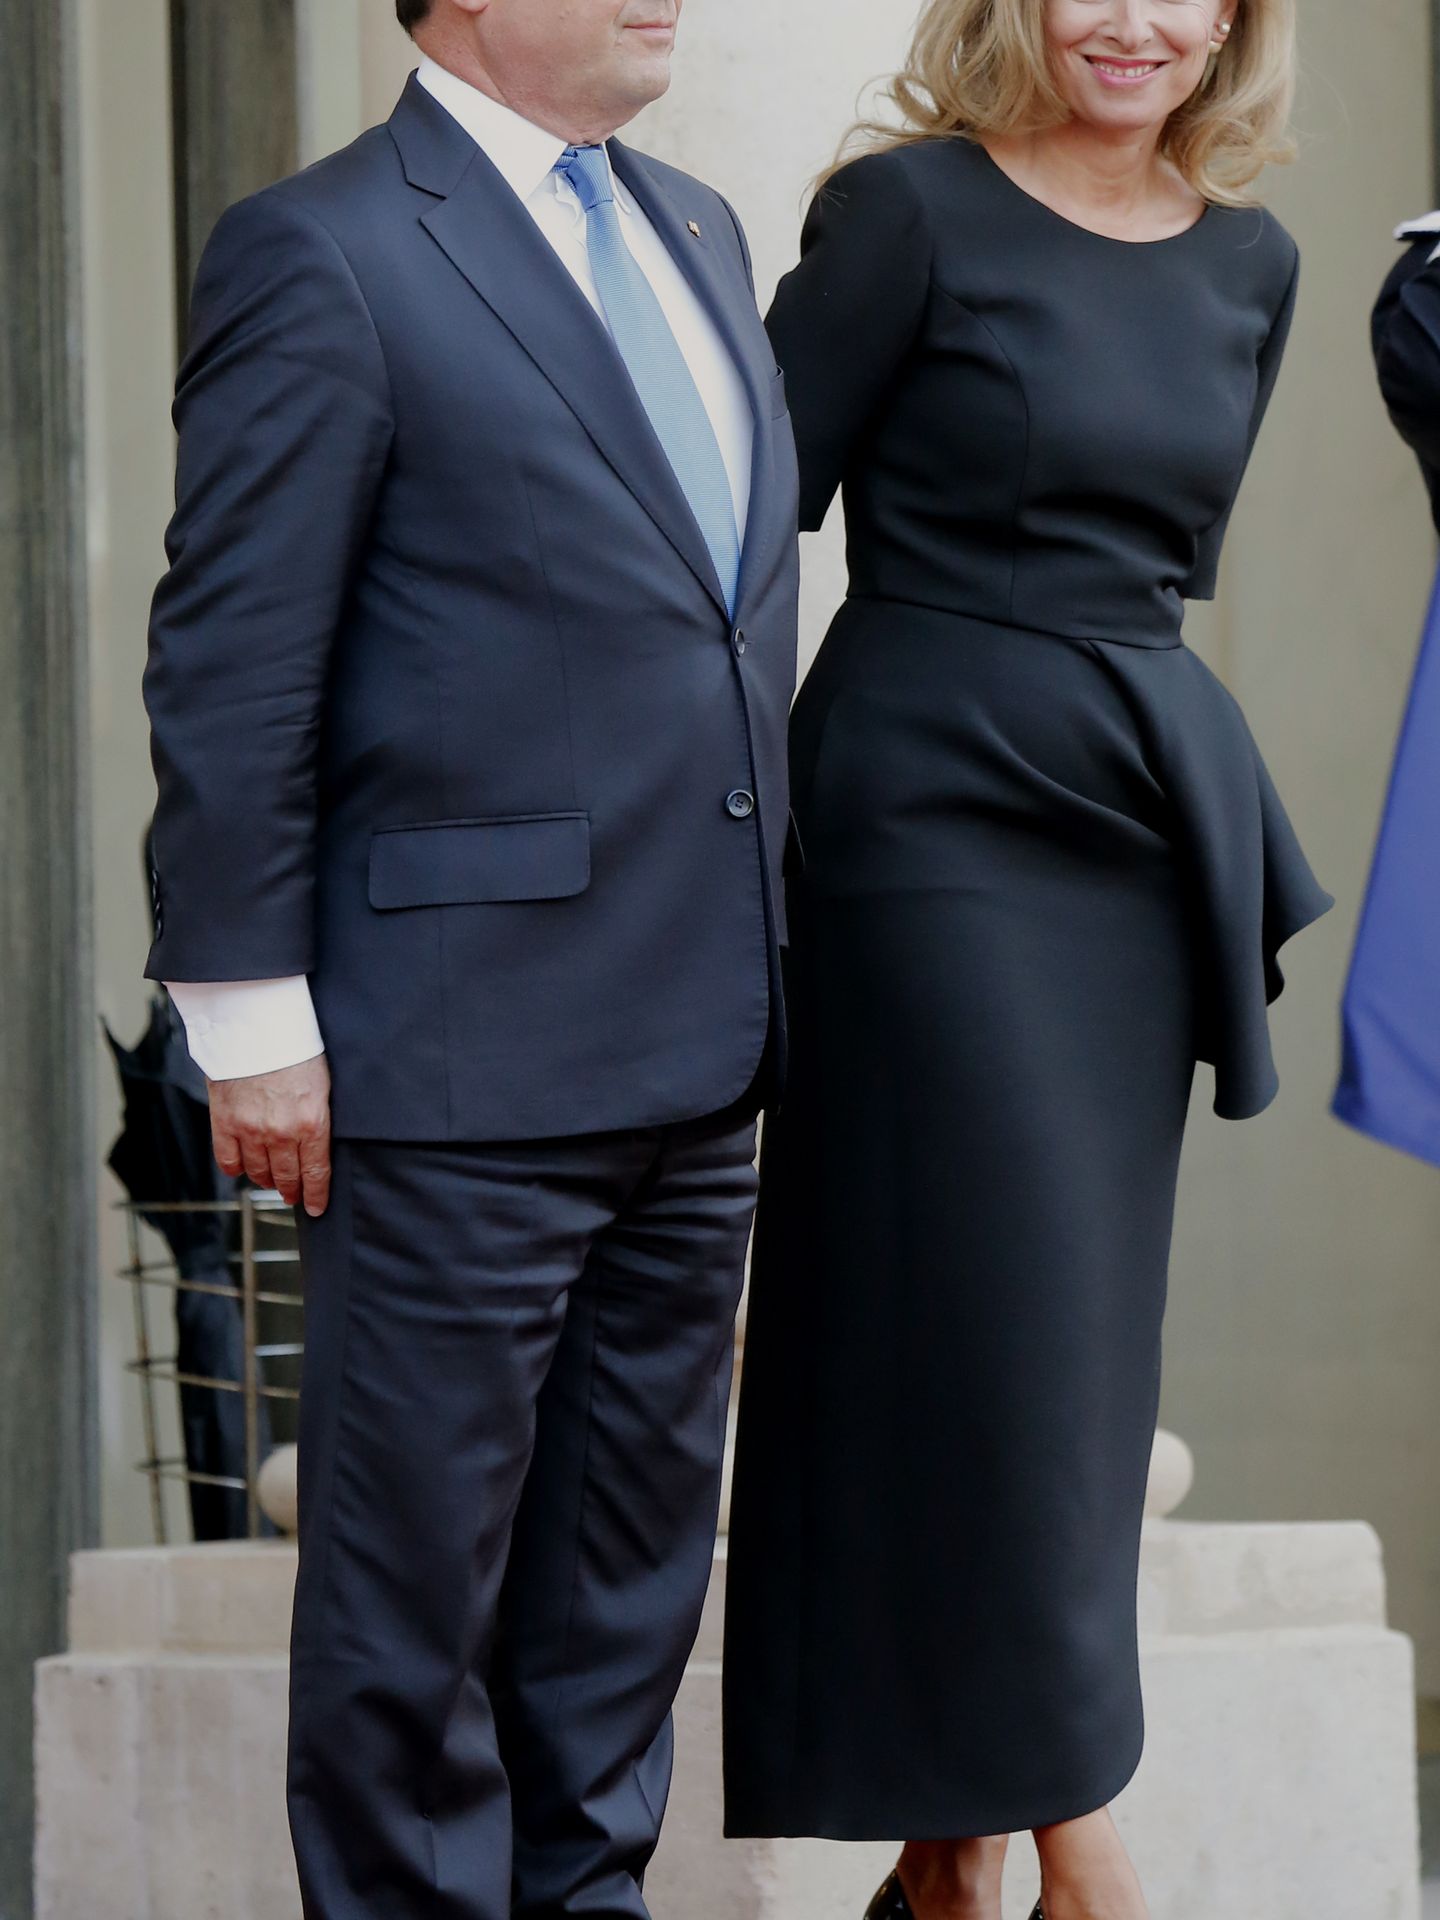 Francois Hollande y Valerie Trierweiler en 2013 (Gtres)